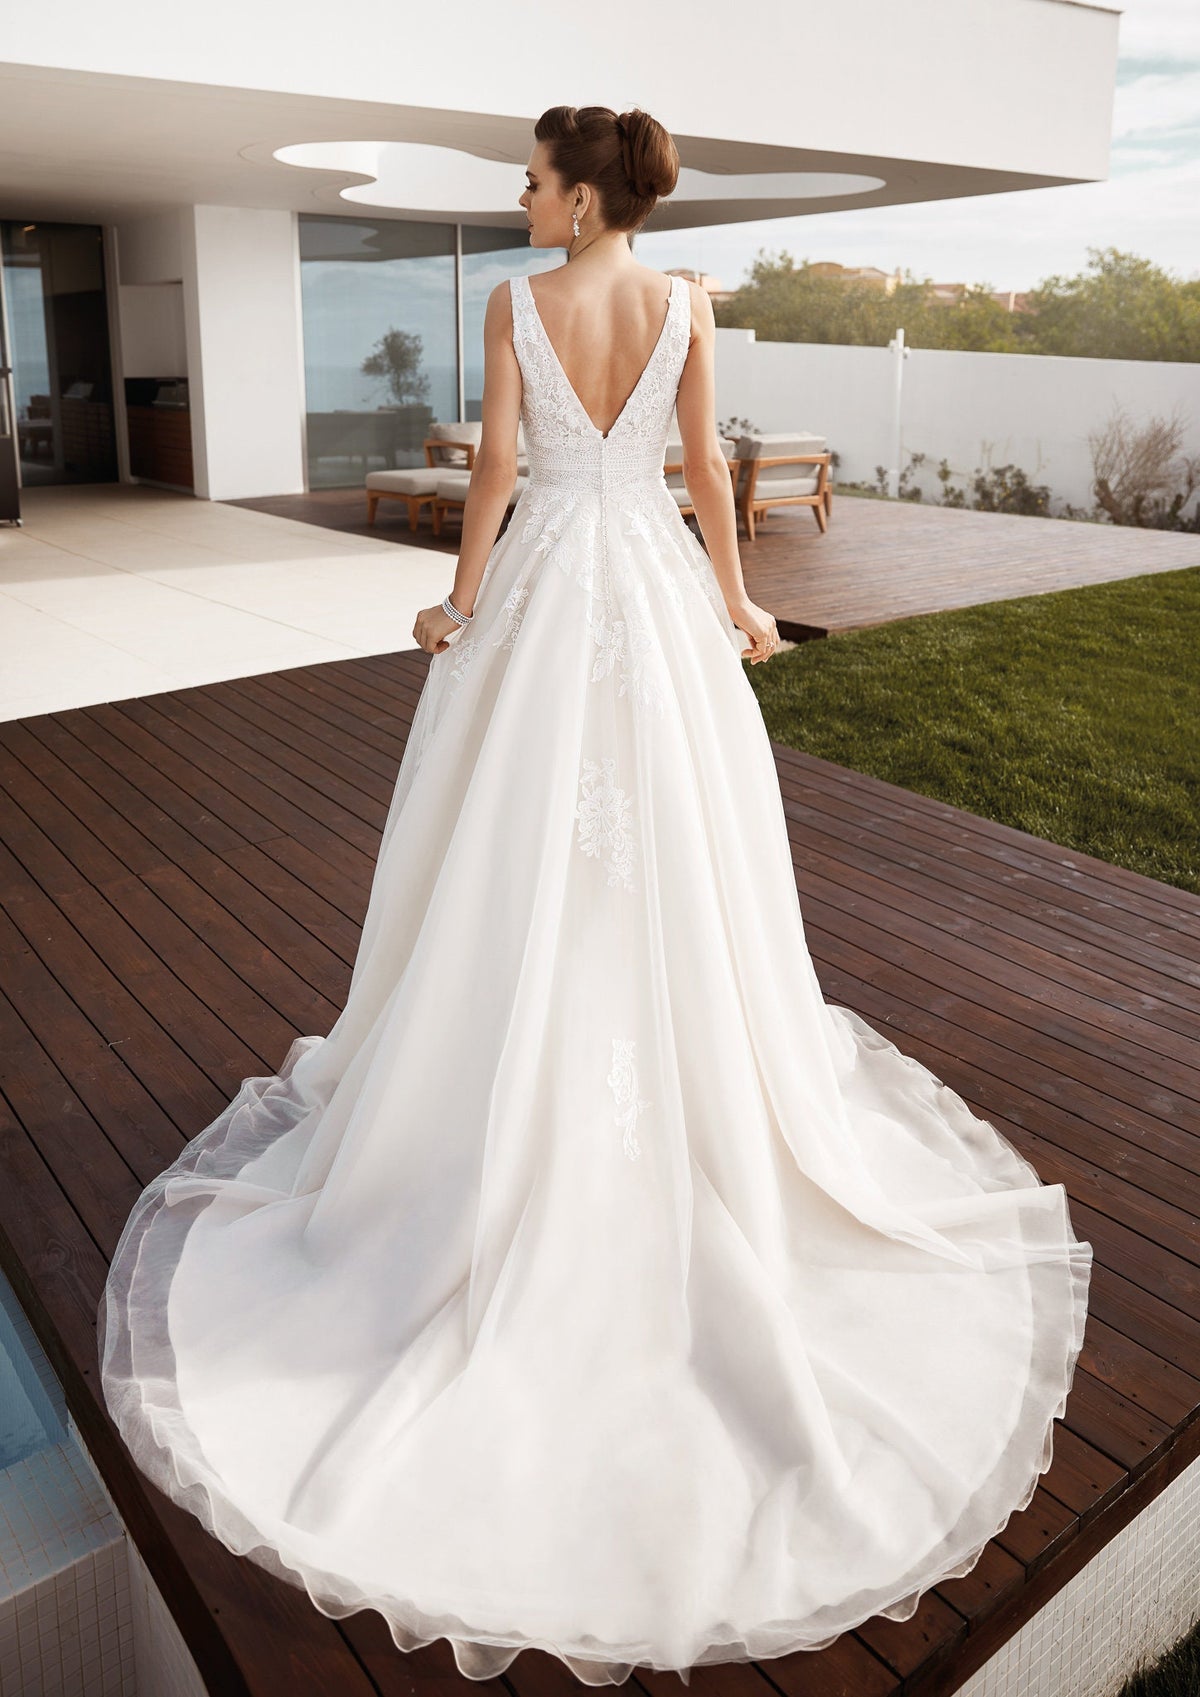 Beautiful Classic ALine Sleeveless V Neckline Wedding Dress Bridal Gown Train Open V Back Lace Bodice Organza Skirt Timeless Design